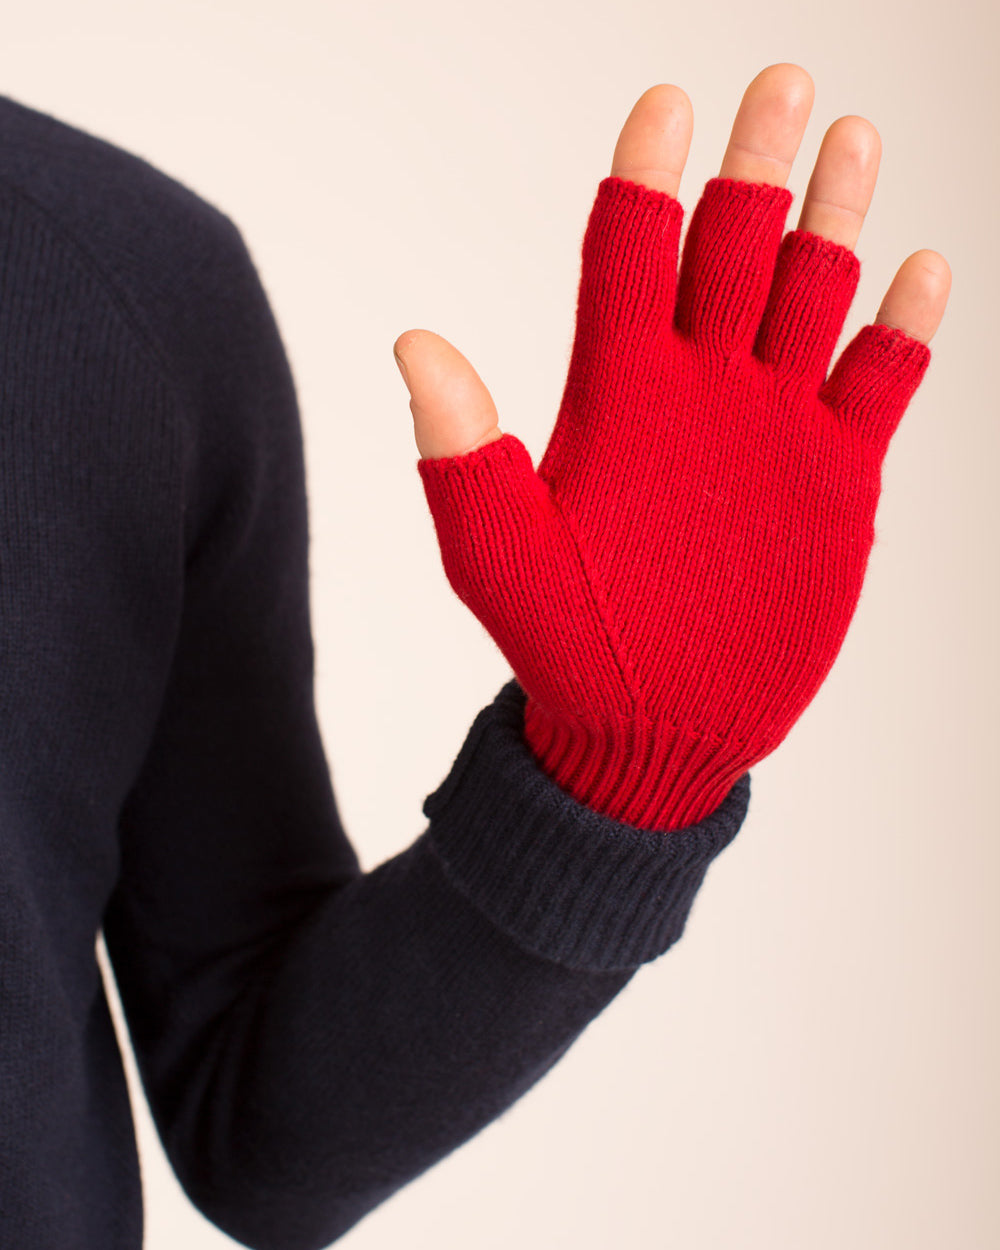 The Men's Fingerless Gloves – Chocolate + Cashmere